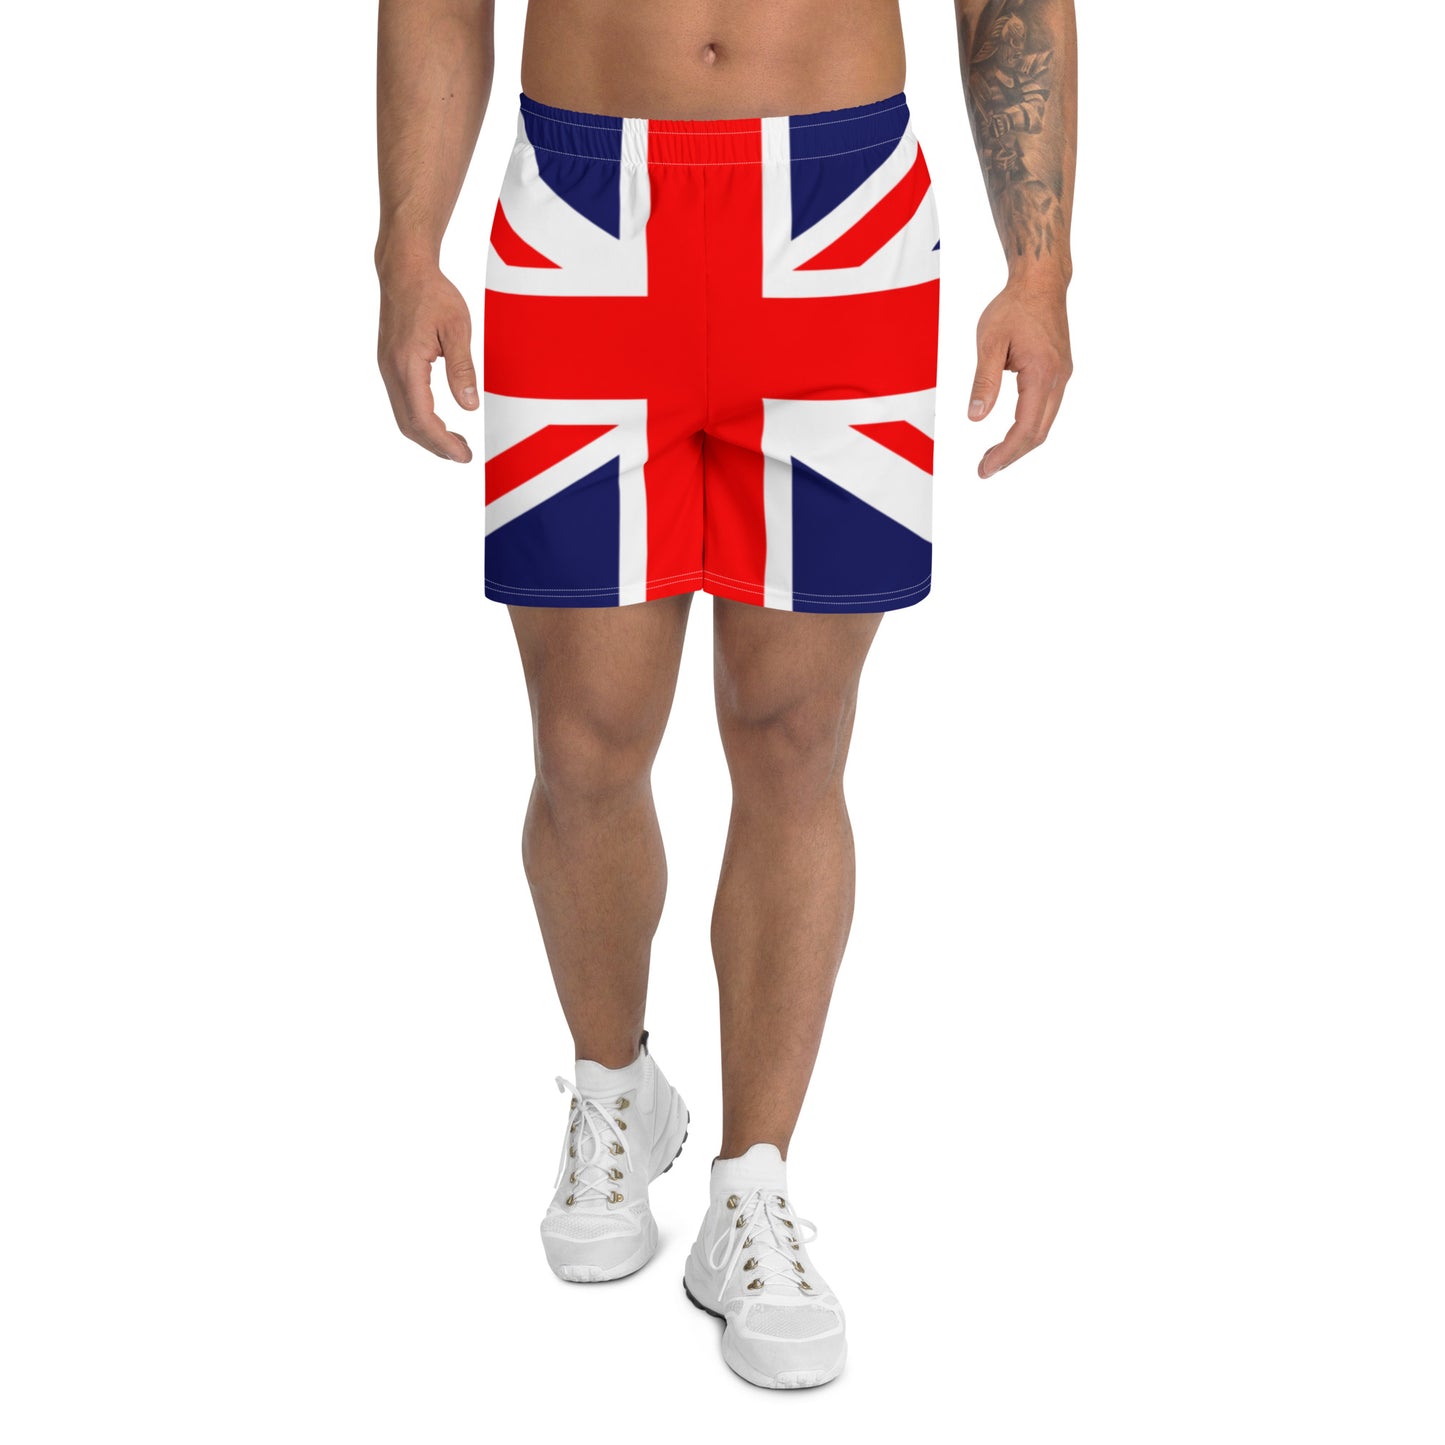 Union Jack Shorts Hombres / Union Jack Ropa / Ropa Británica / Ropa Patriota / Ecológico